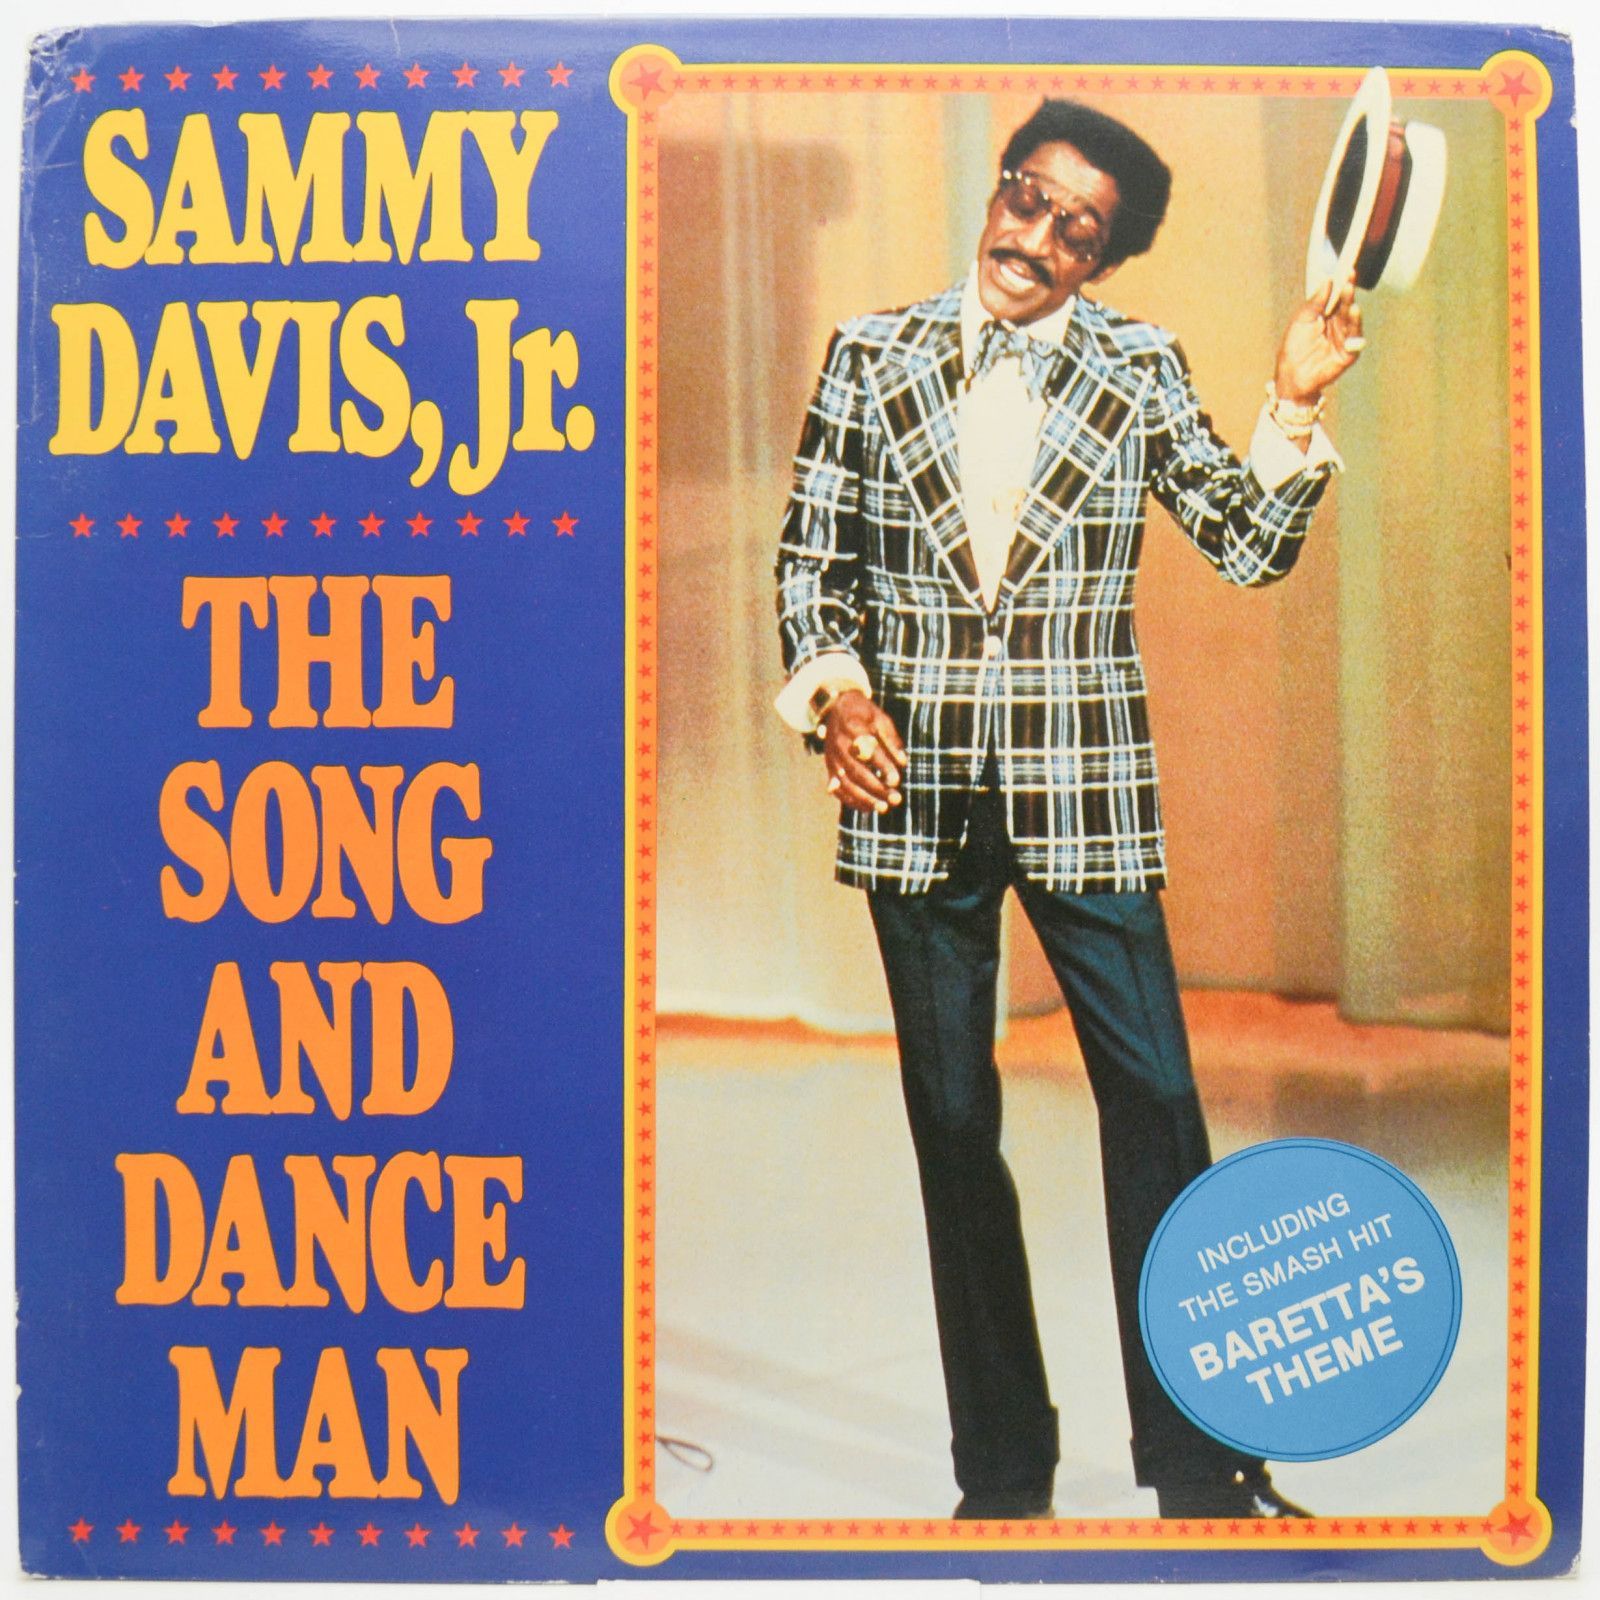 Sammy Davis Jr. — The Song And Dance Man, 1976